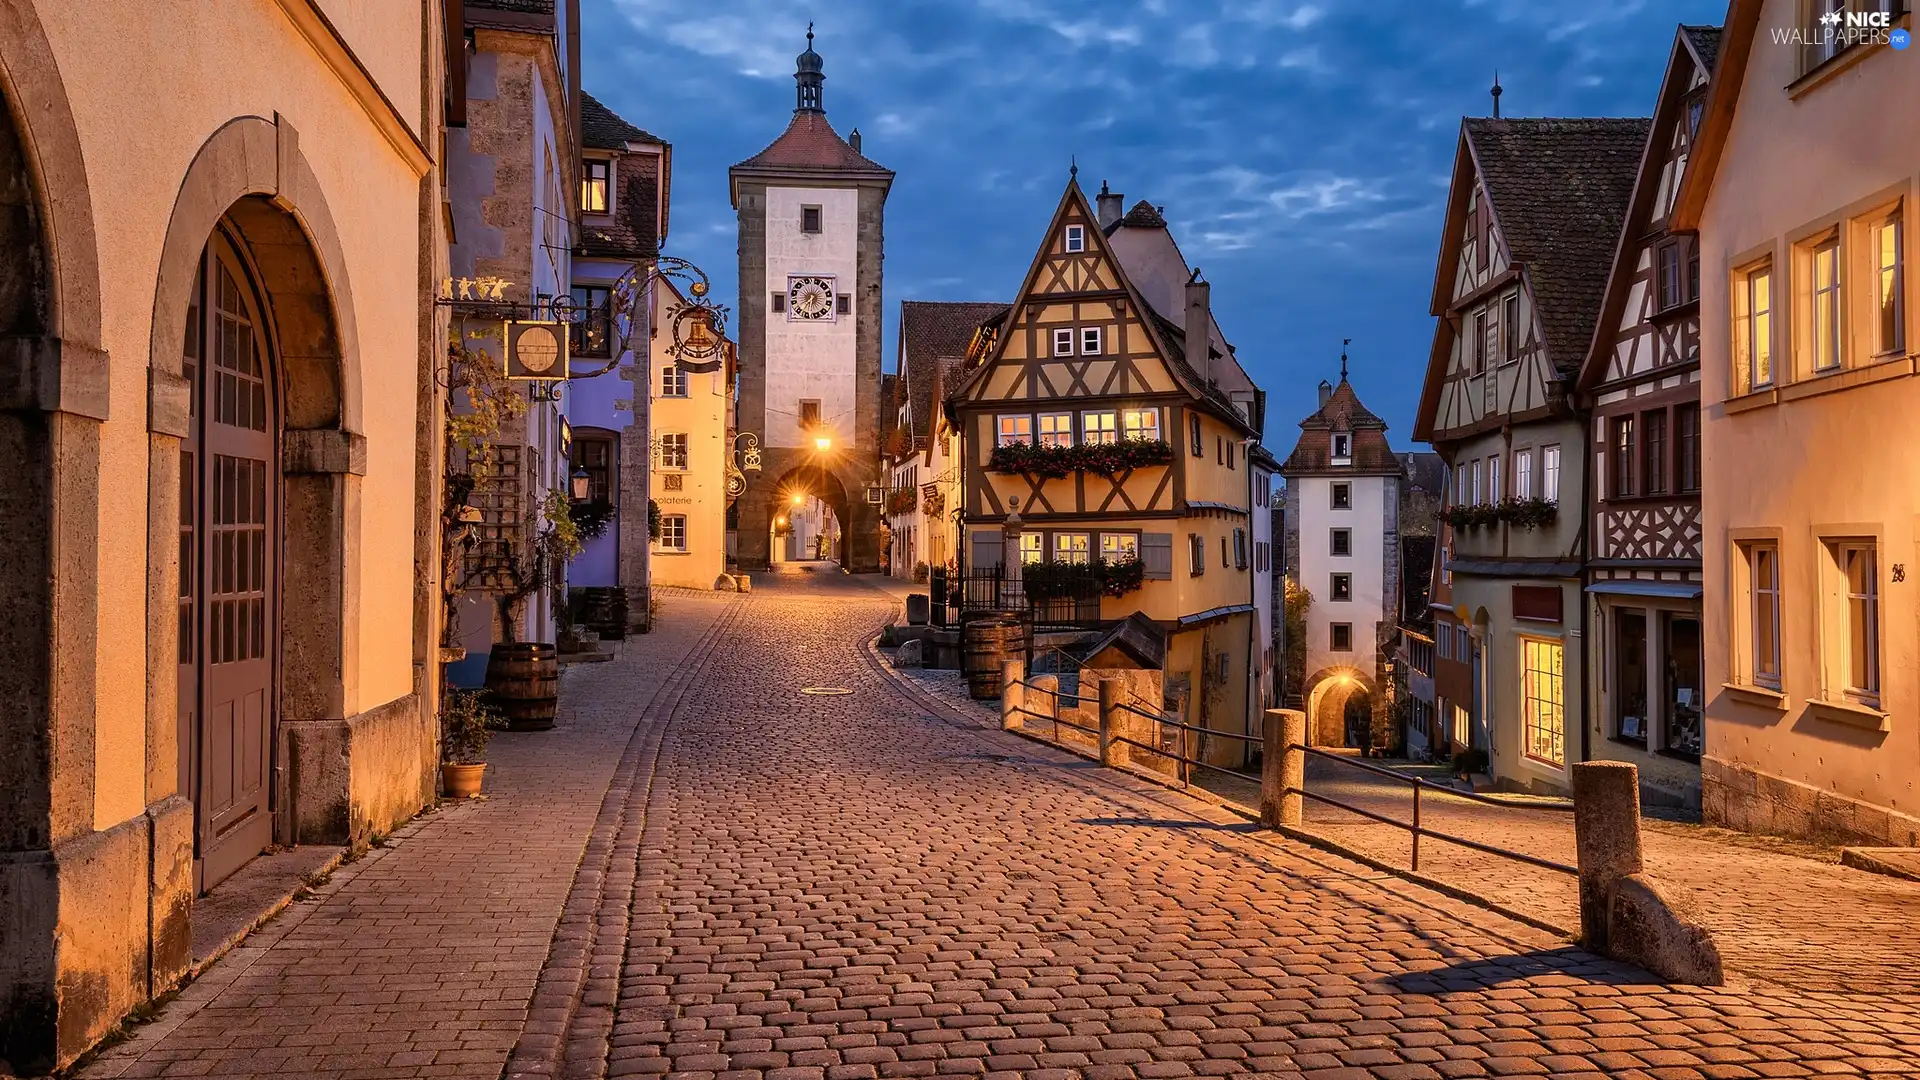 Houses, Street, Bavaria, Rothenburg ob der Tauber, Germany